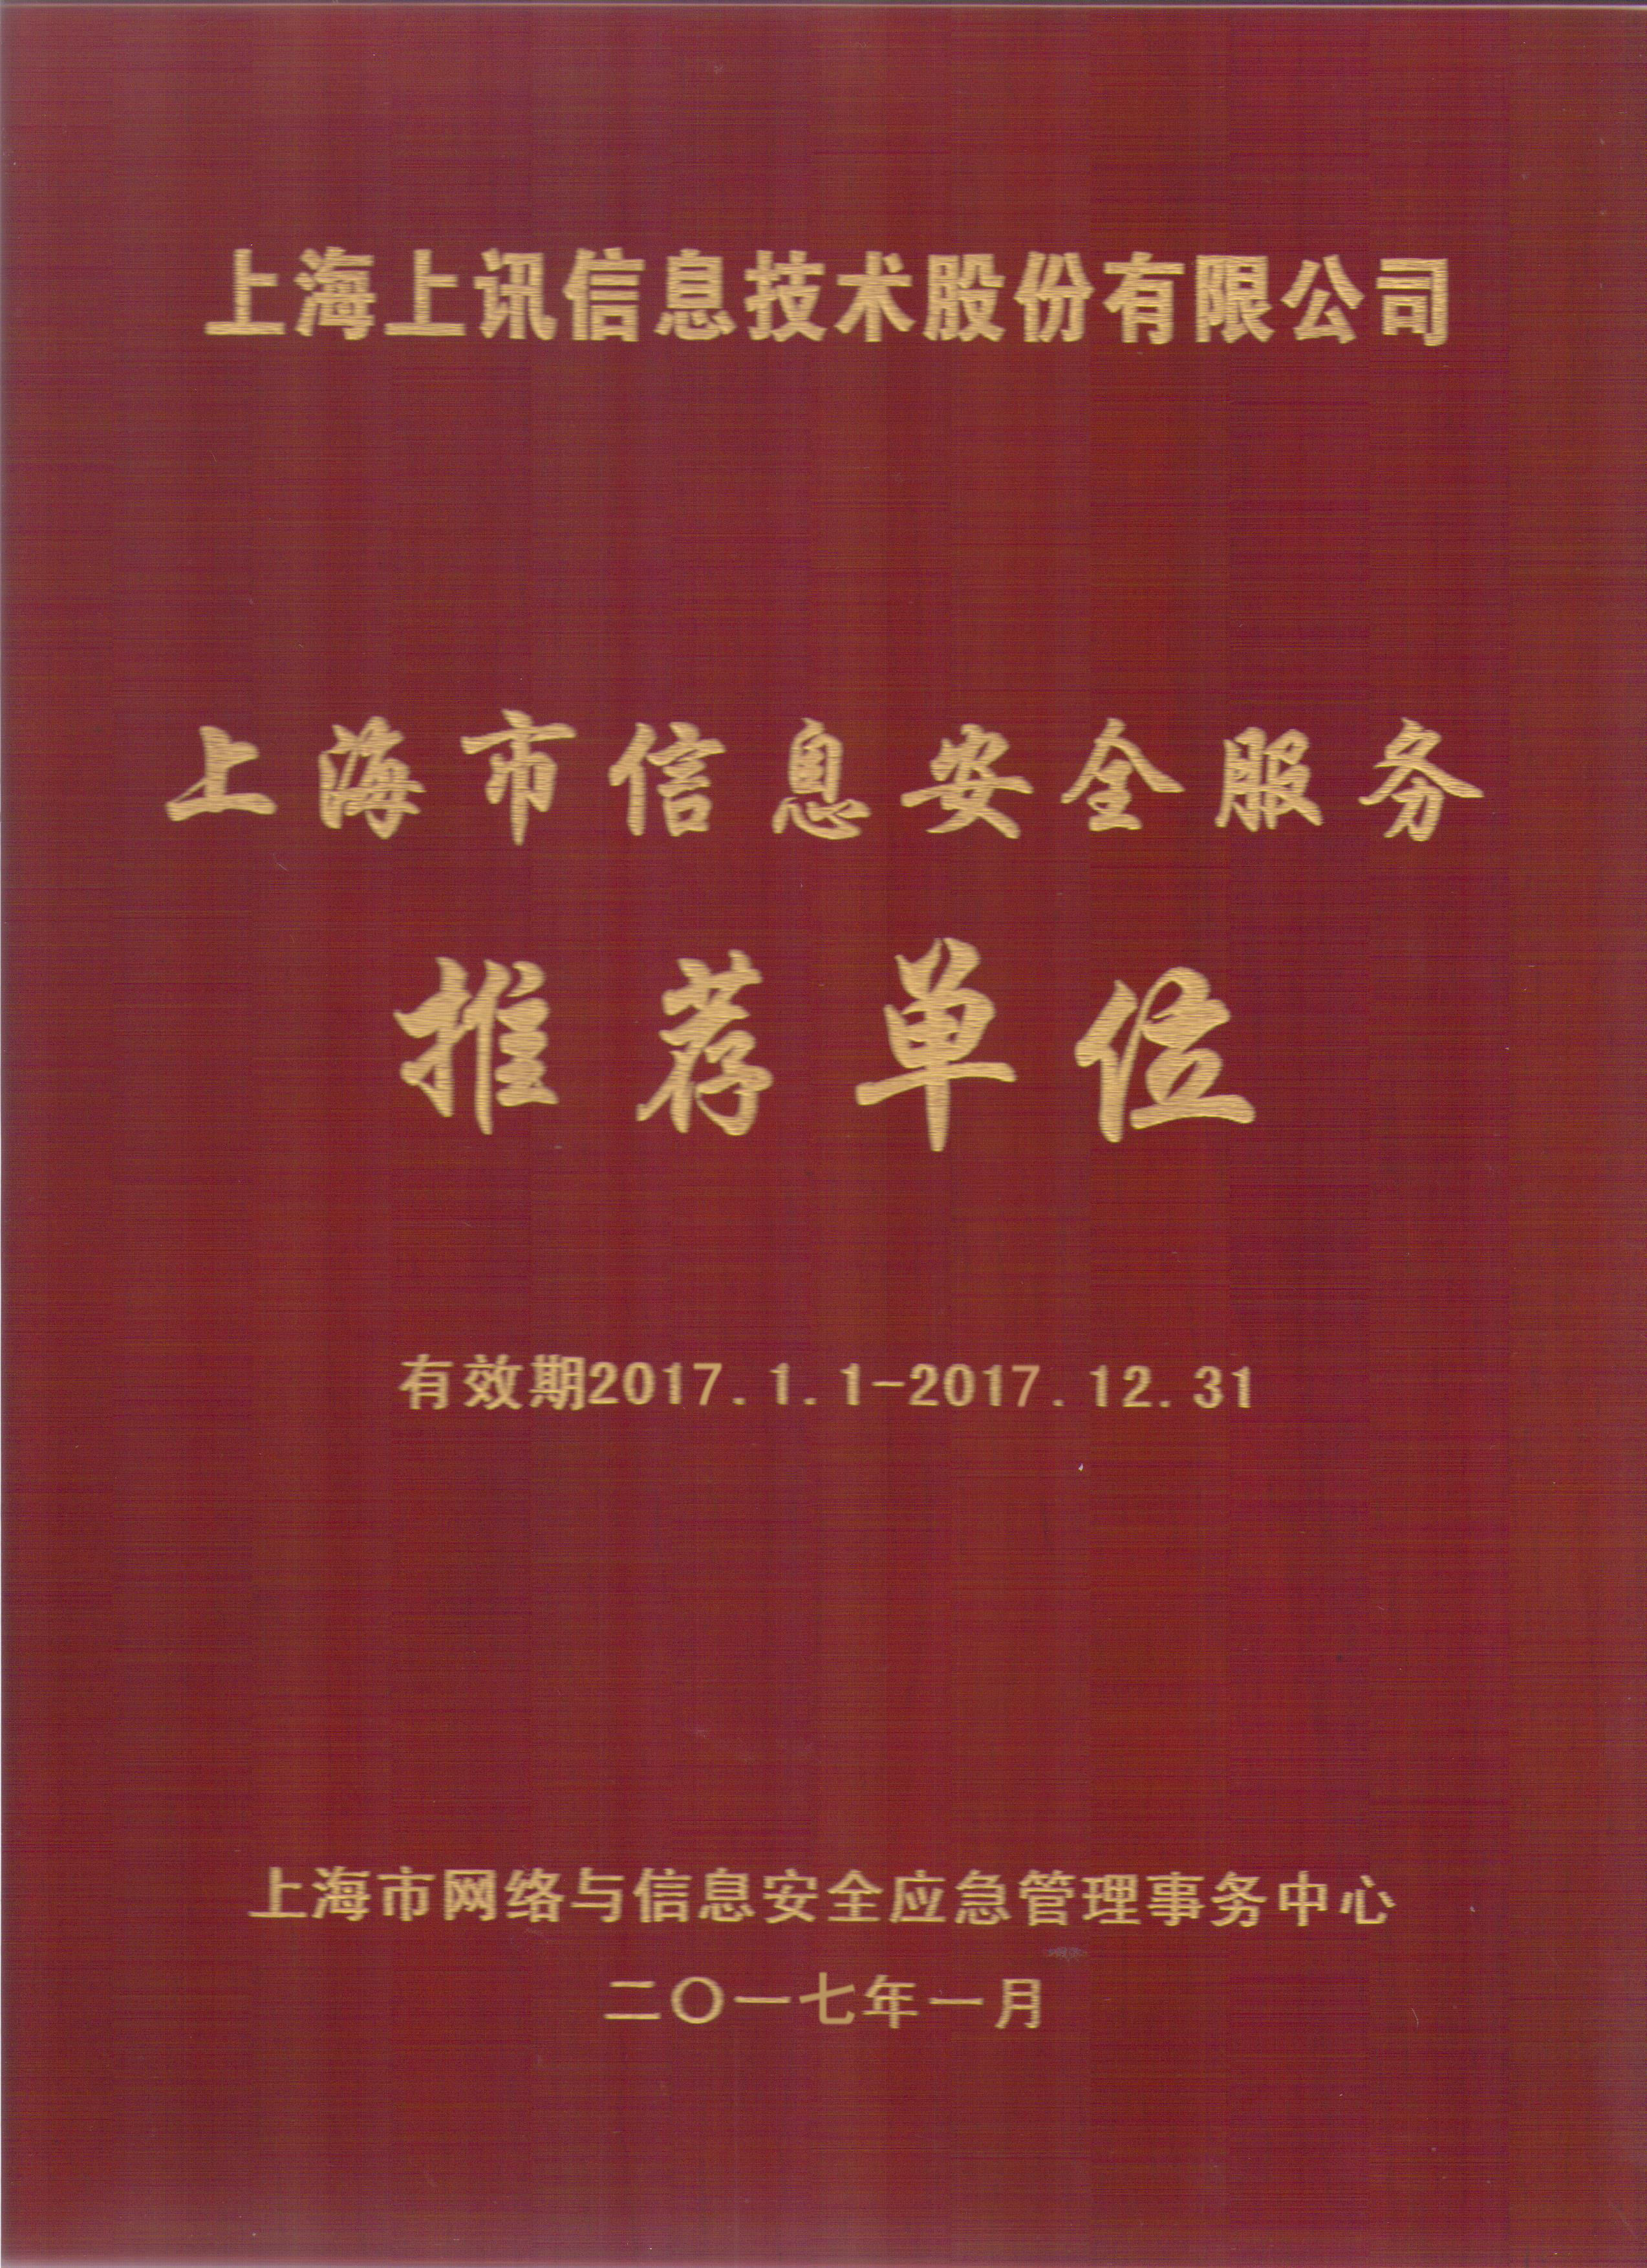 Shanghai Information Security Service Recommendation Unit